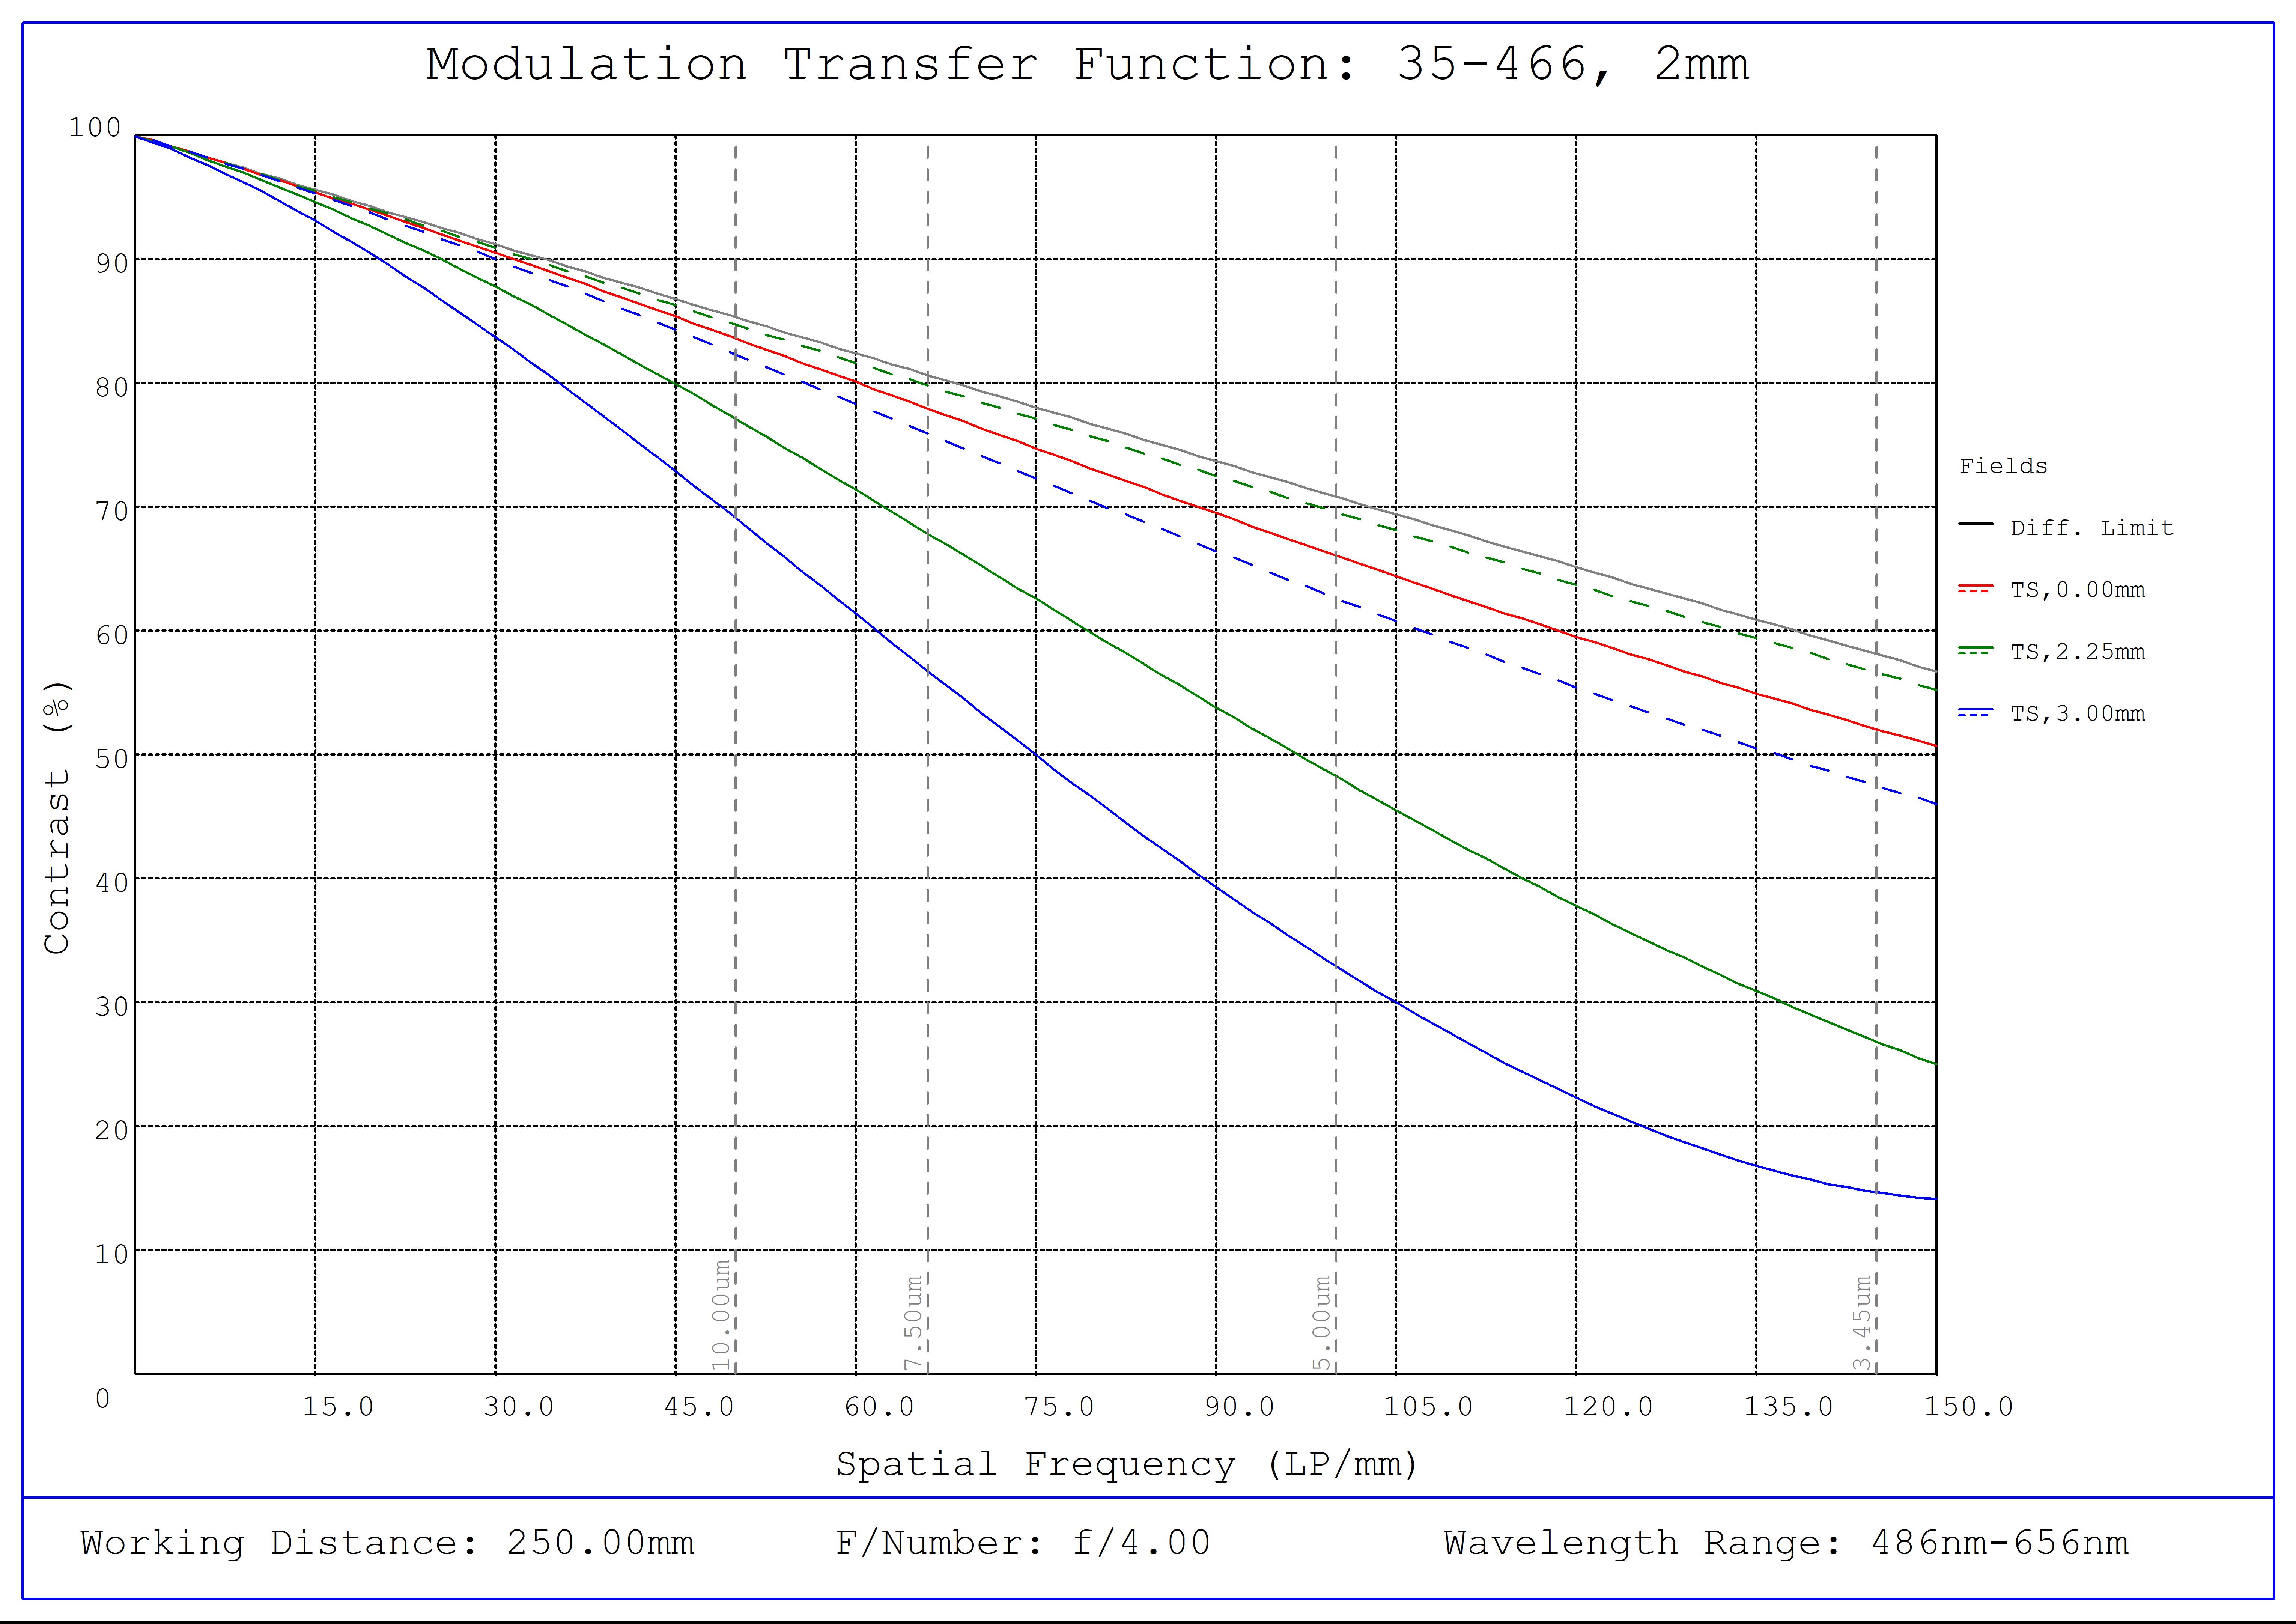 #35-466, 2mm FL f/4 IR-Cut, Blue Series M12 Lens, Modulated Transfer Function (MTF) Plot, 250mm Working Distance, f4